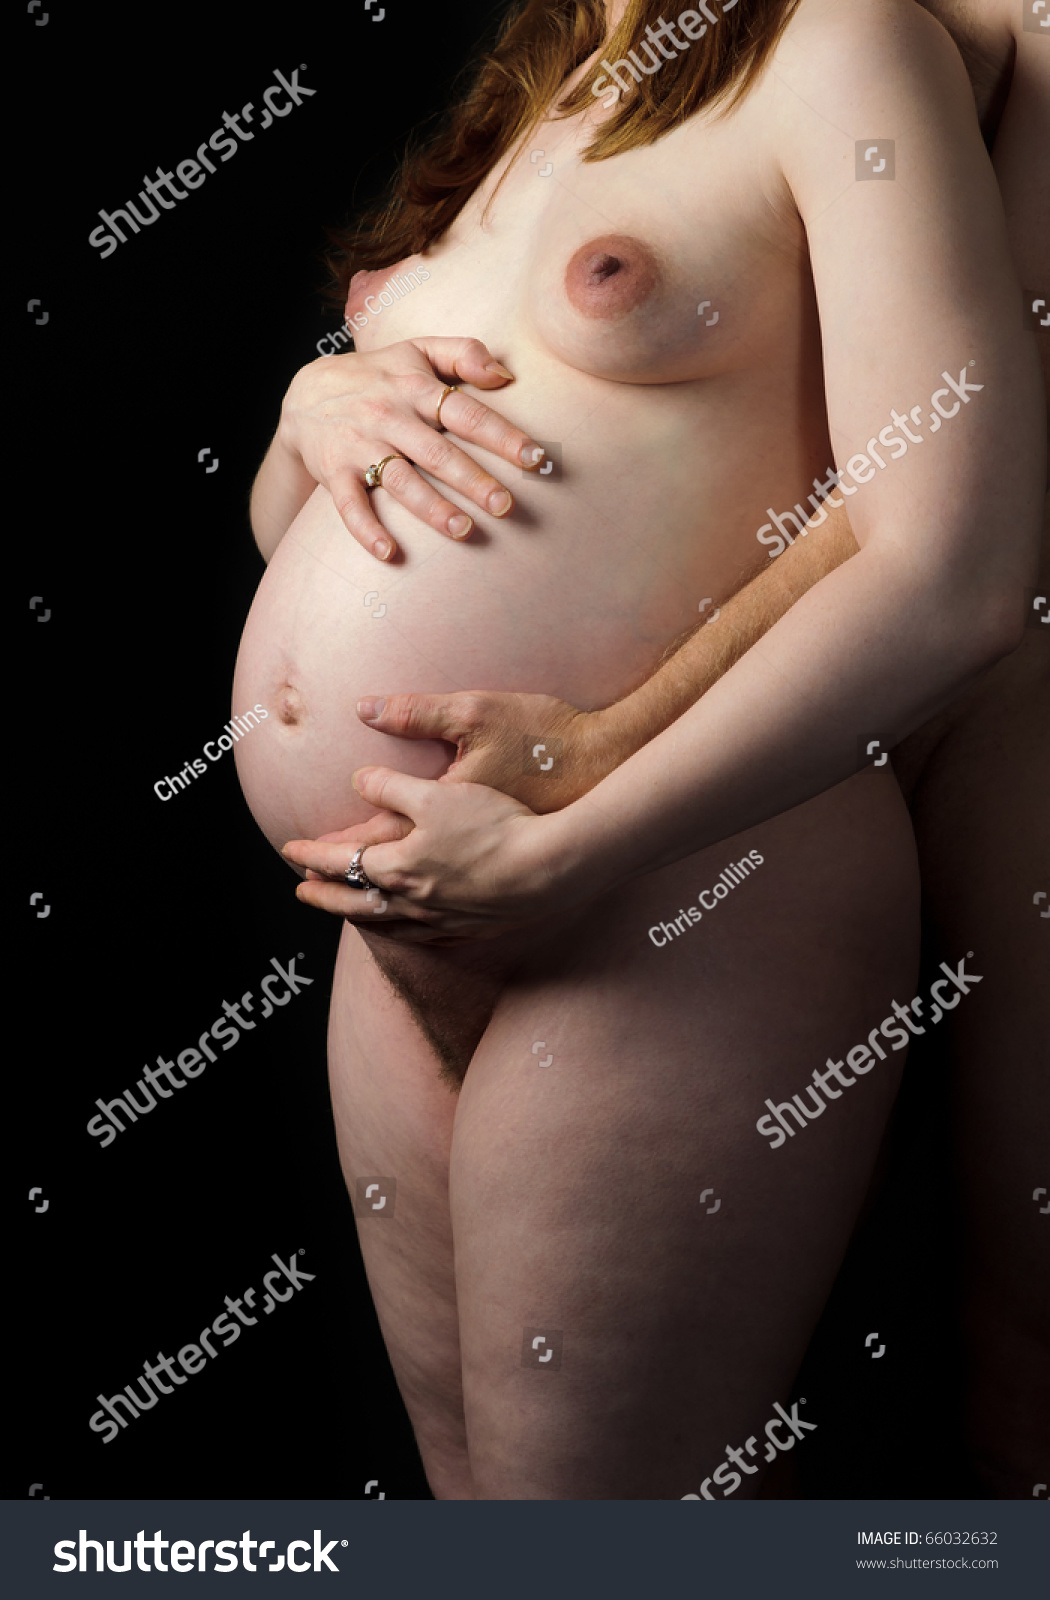 Pregnant nude pics